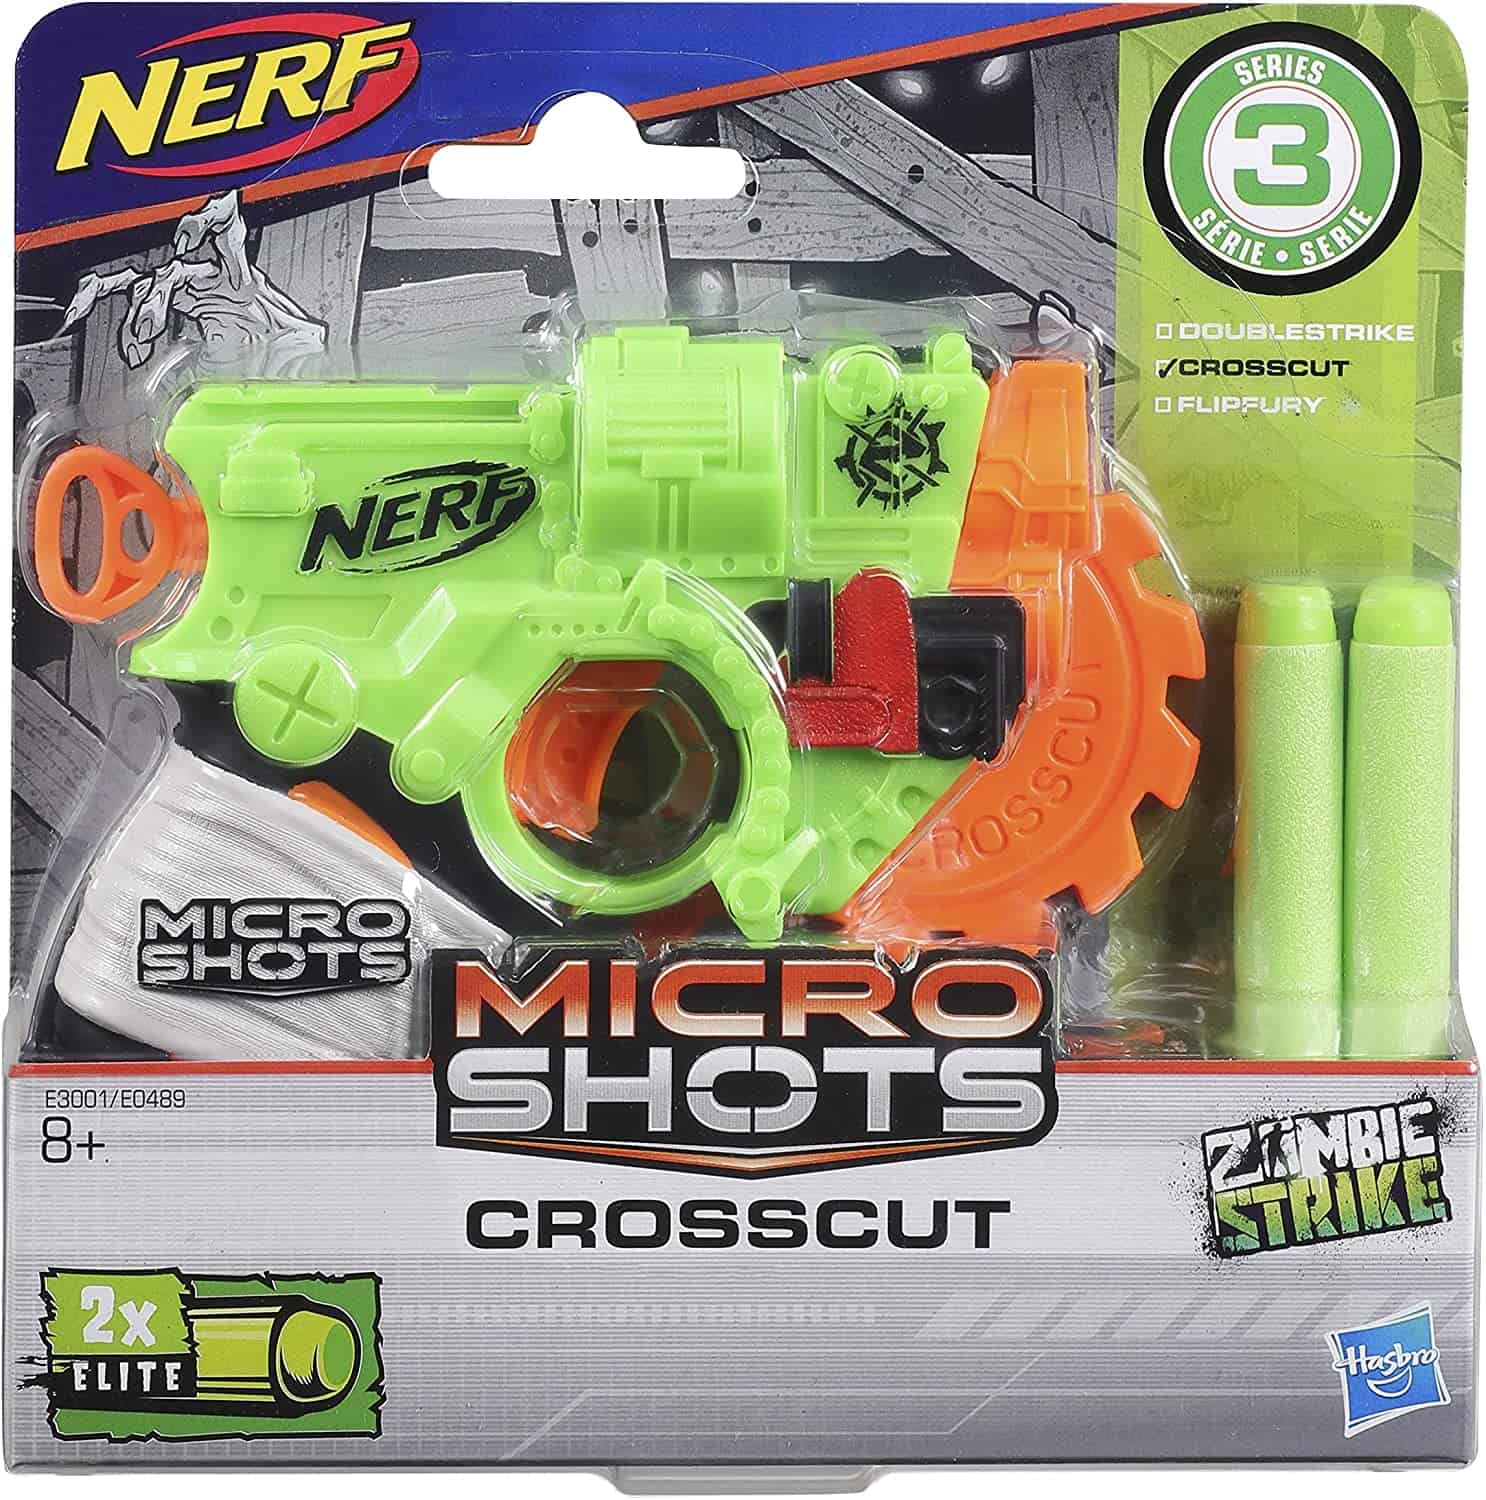 Nerf Micro Shots Crosscut Hasbro E3001